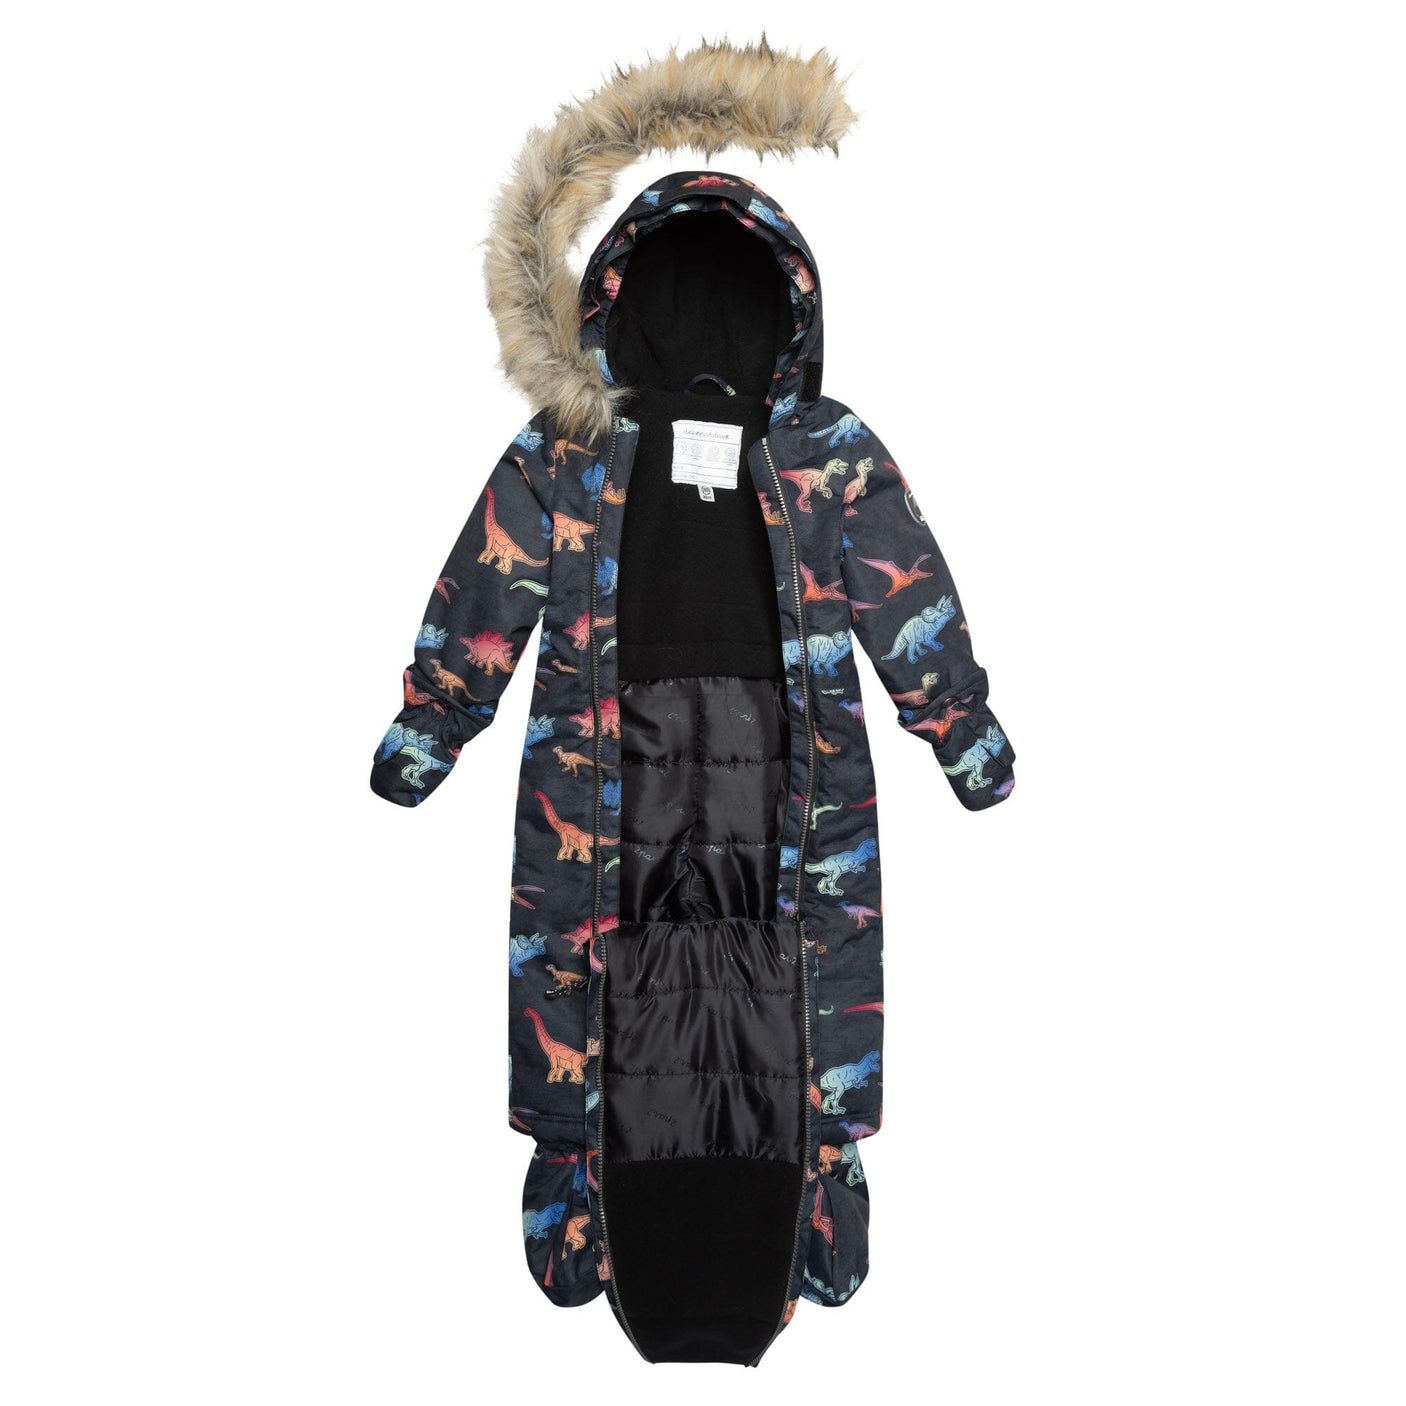 One Piece Baby Snowsuit Black With Gradient Dino Print-3